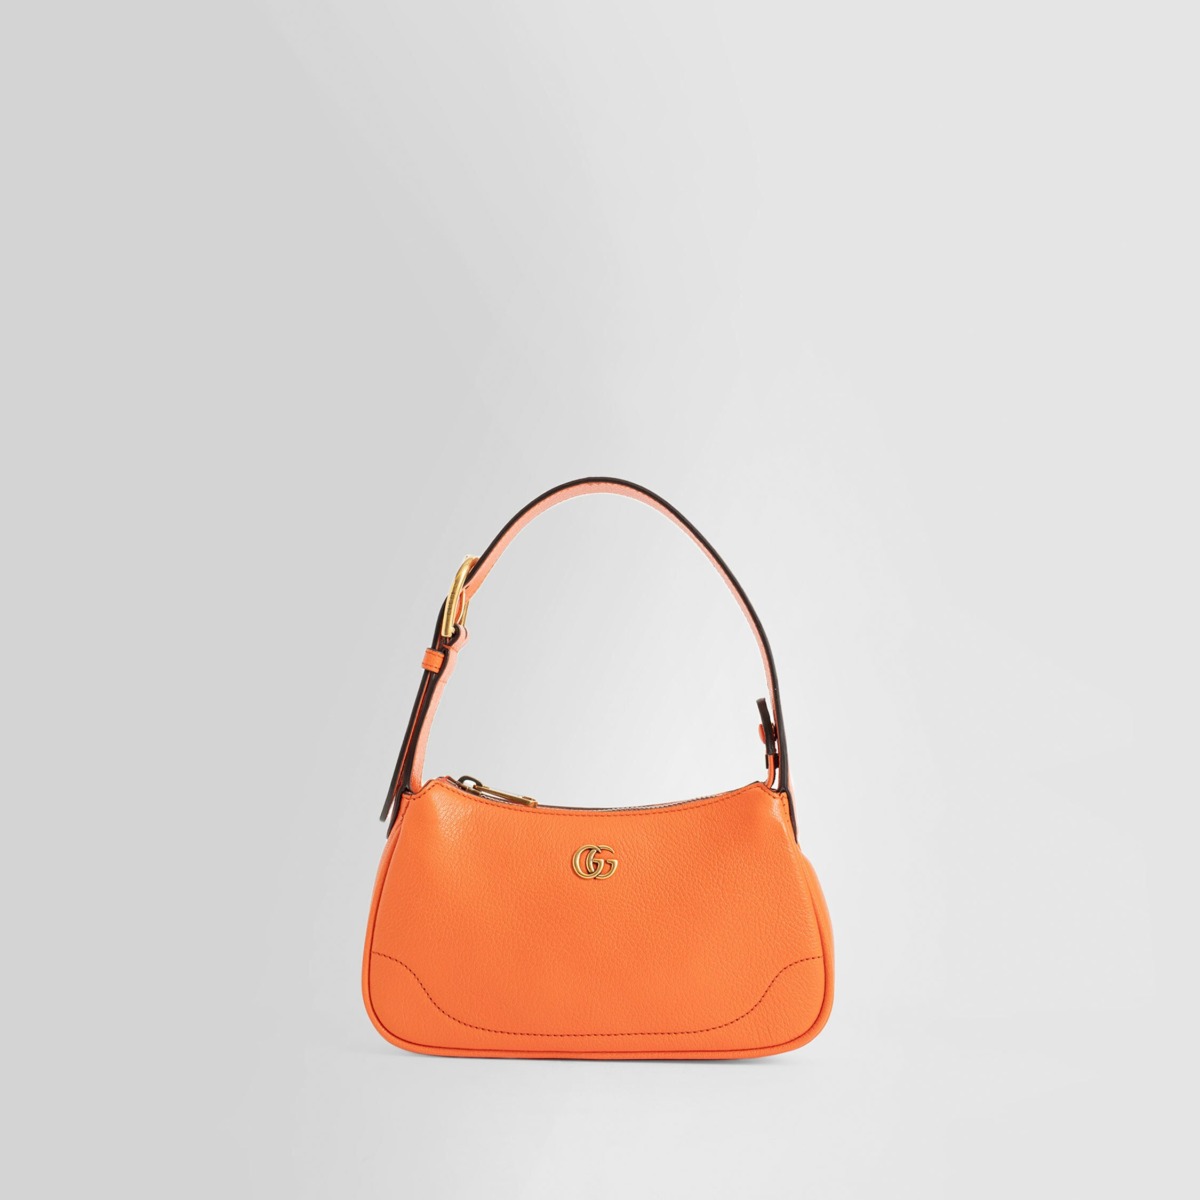 Gucci Lady Orange Shoulder Bag by Antonioli GOOFASH